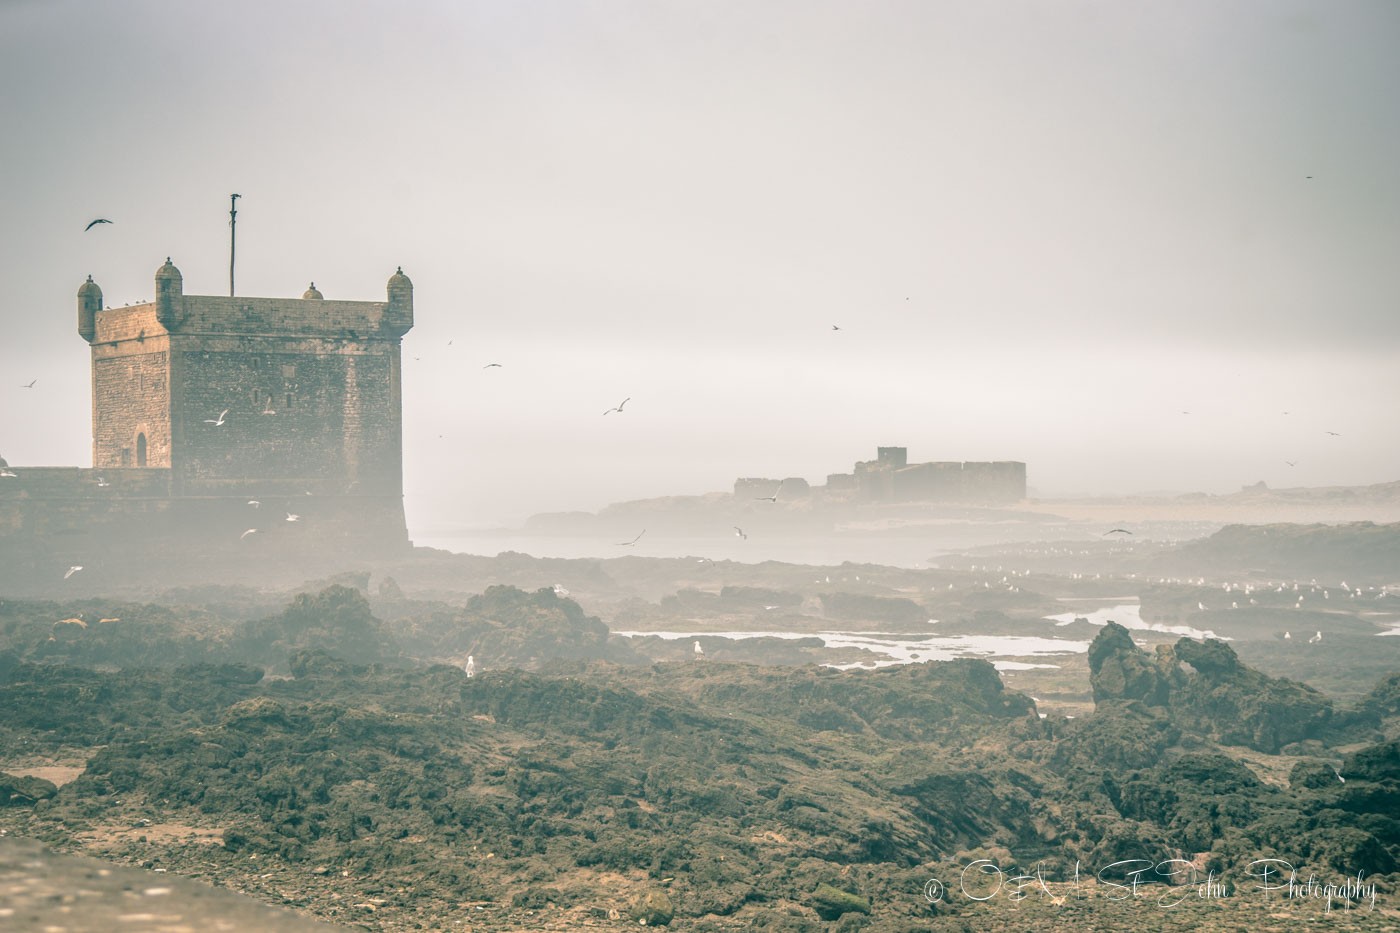 Morning fog sets in on the coast of Essaouira, Morocco